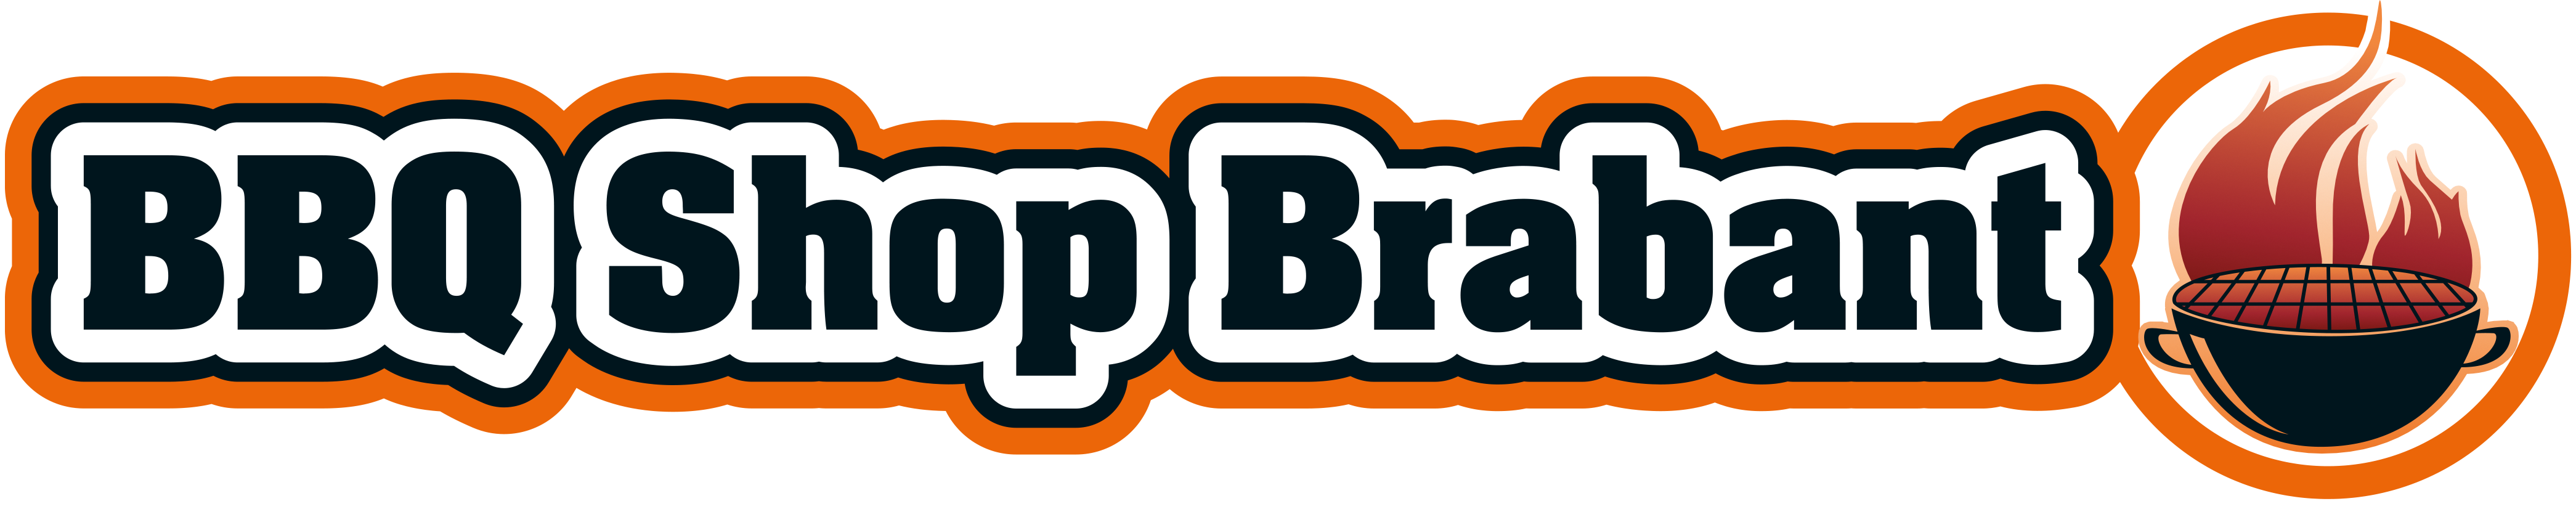 BBQ Shop Brabant